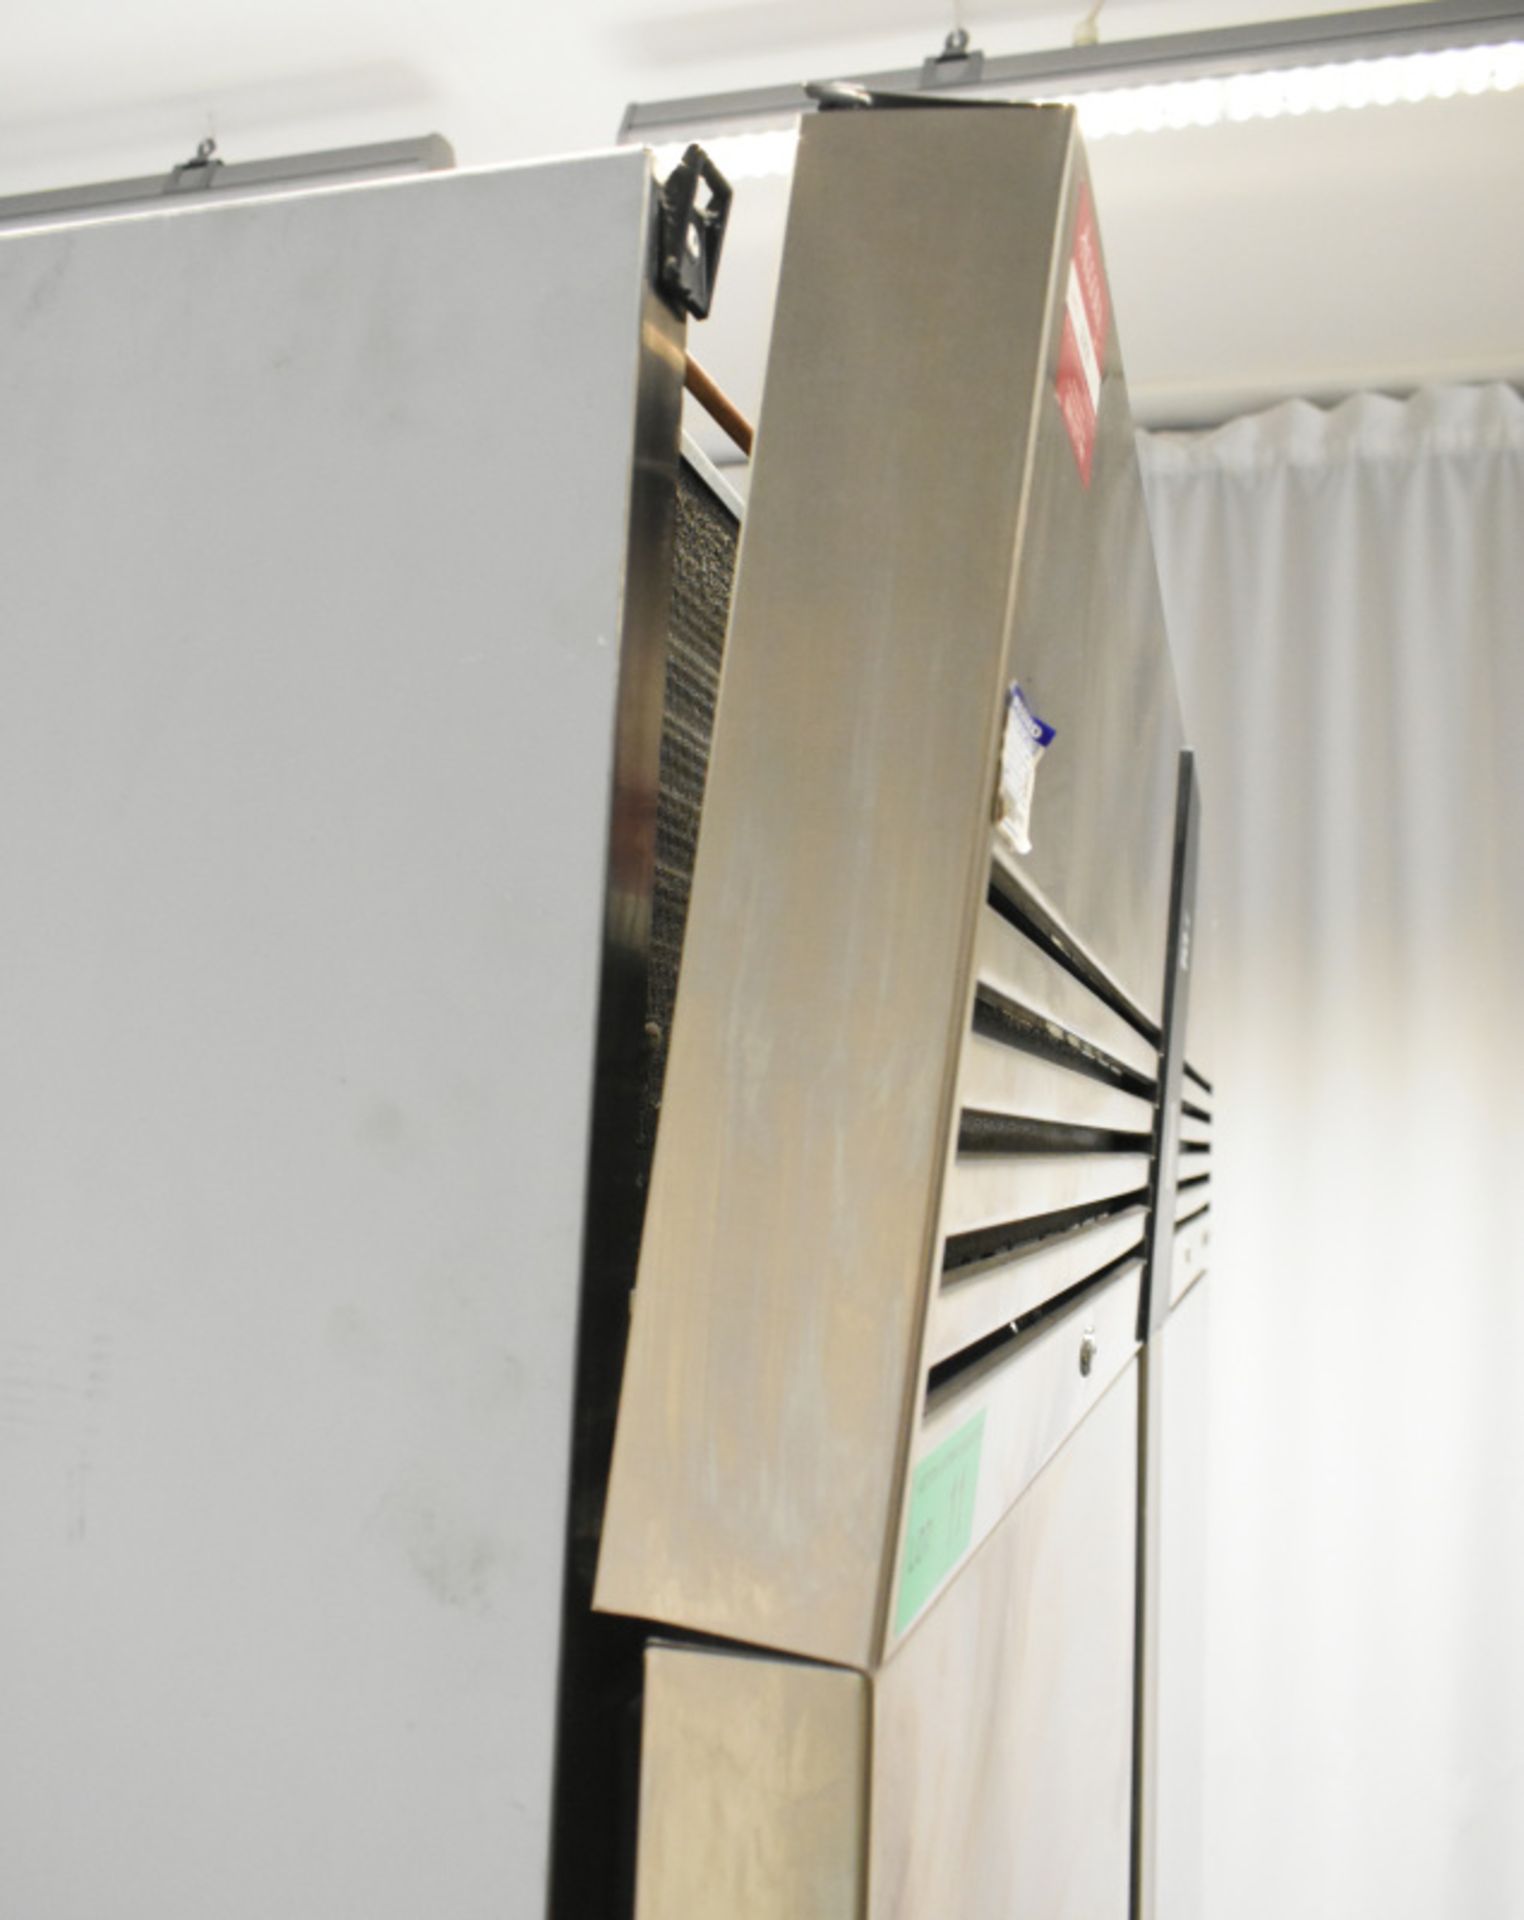 Foster Double Door Eco Pro G2 Refrigerator - Image 8 of 10